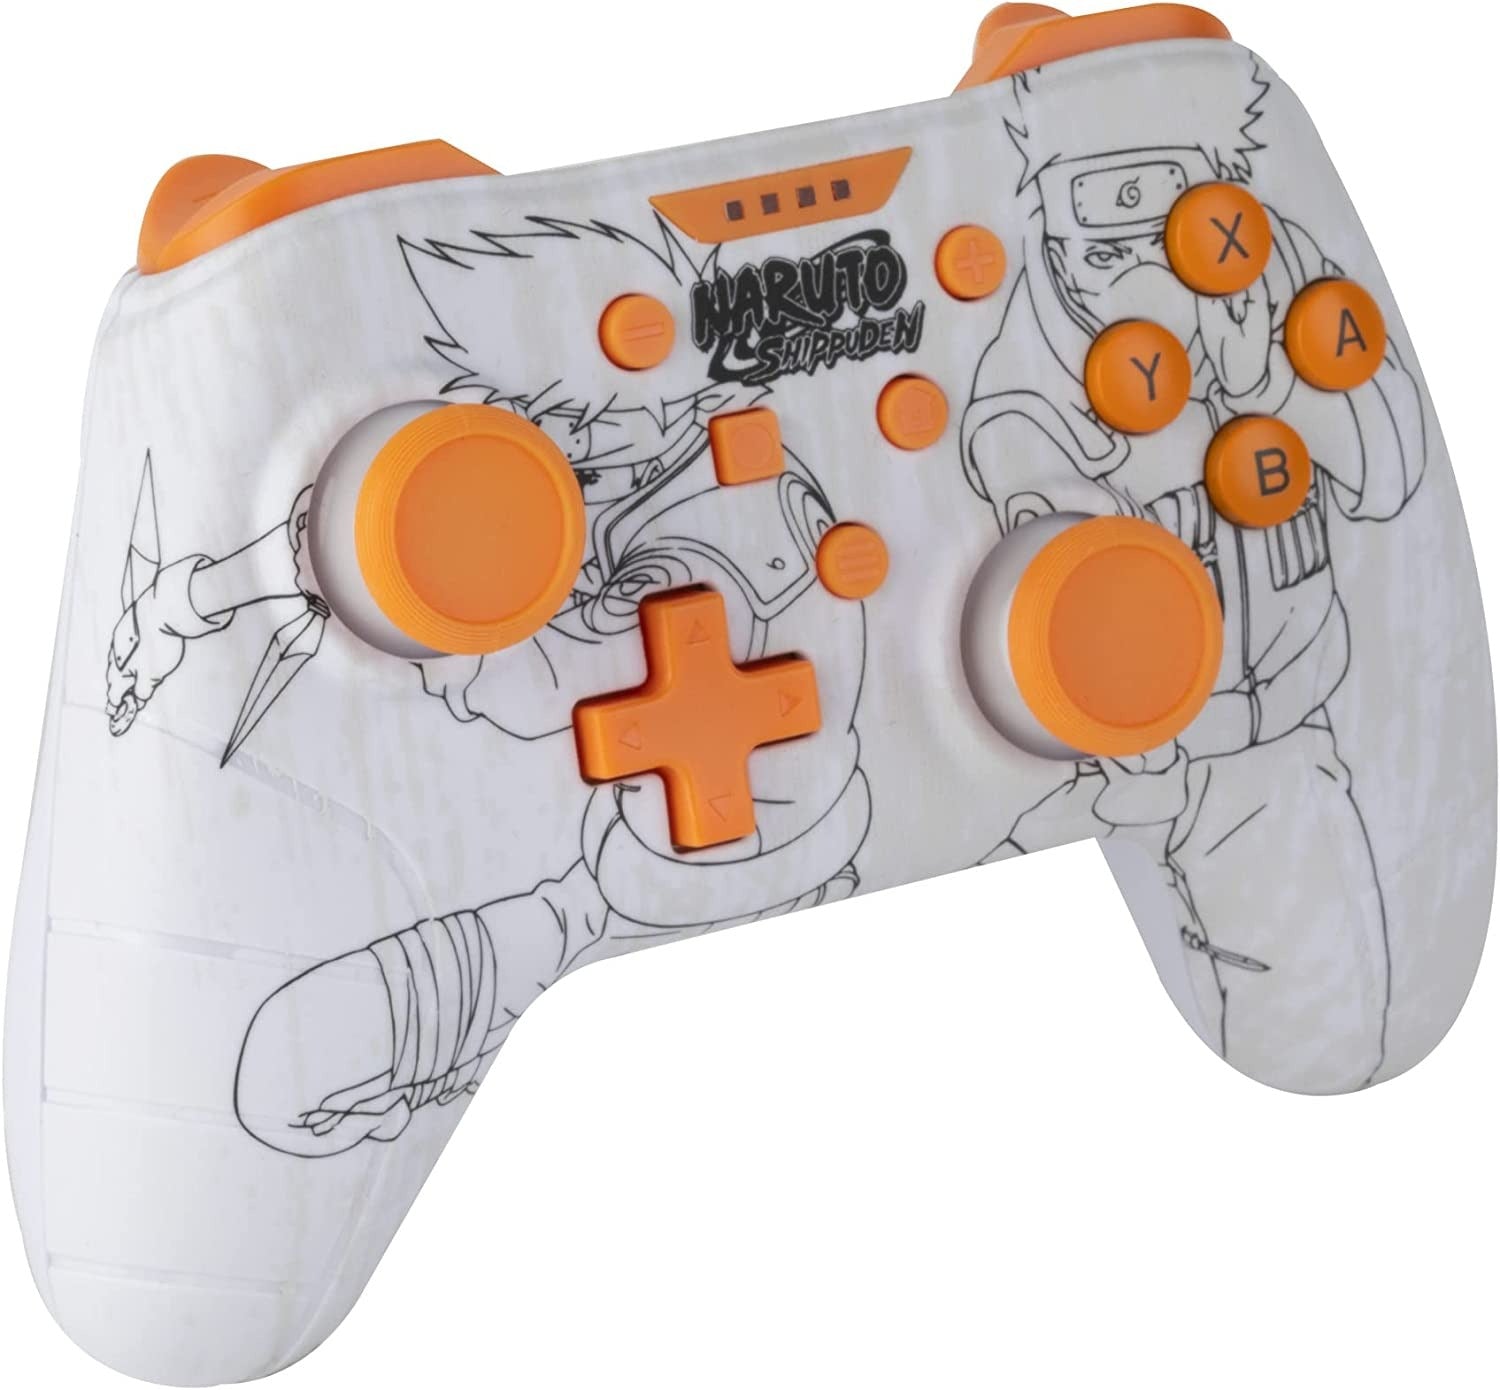 Naruto White Controller Switch